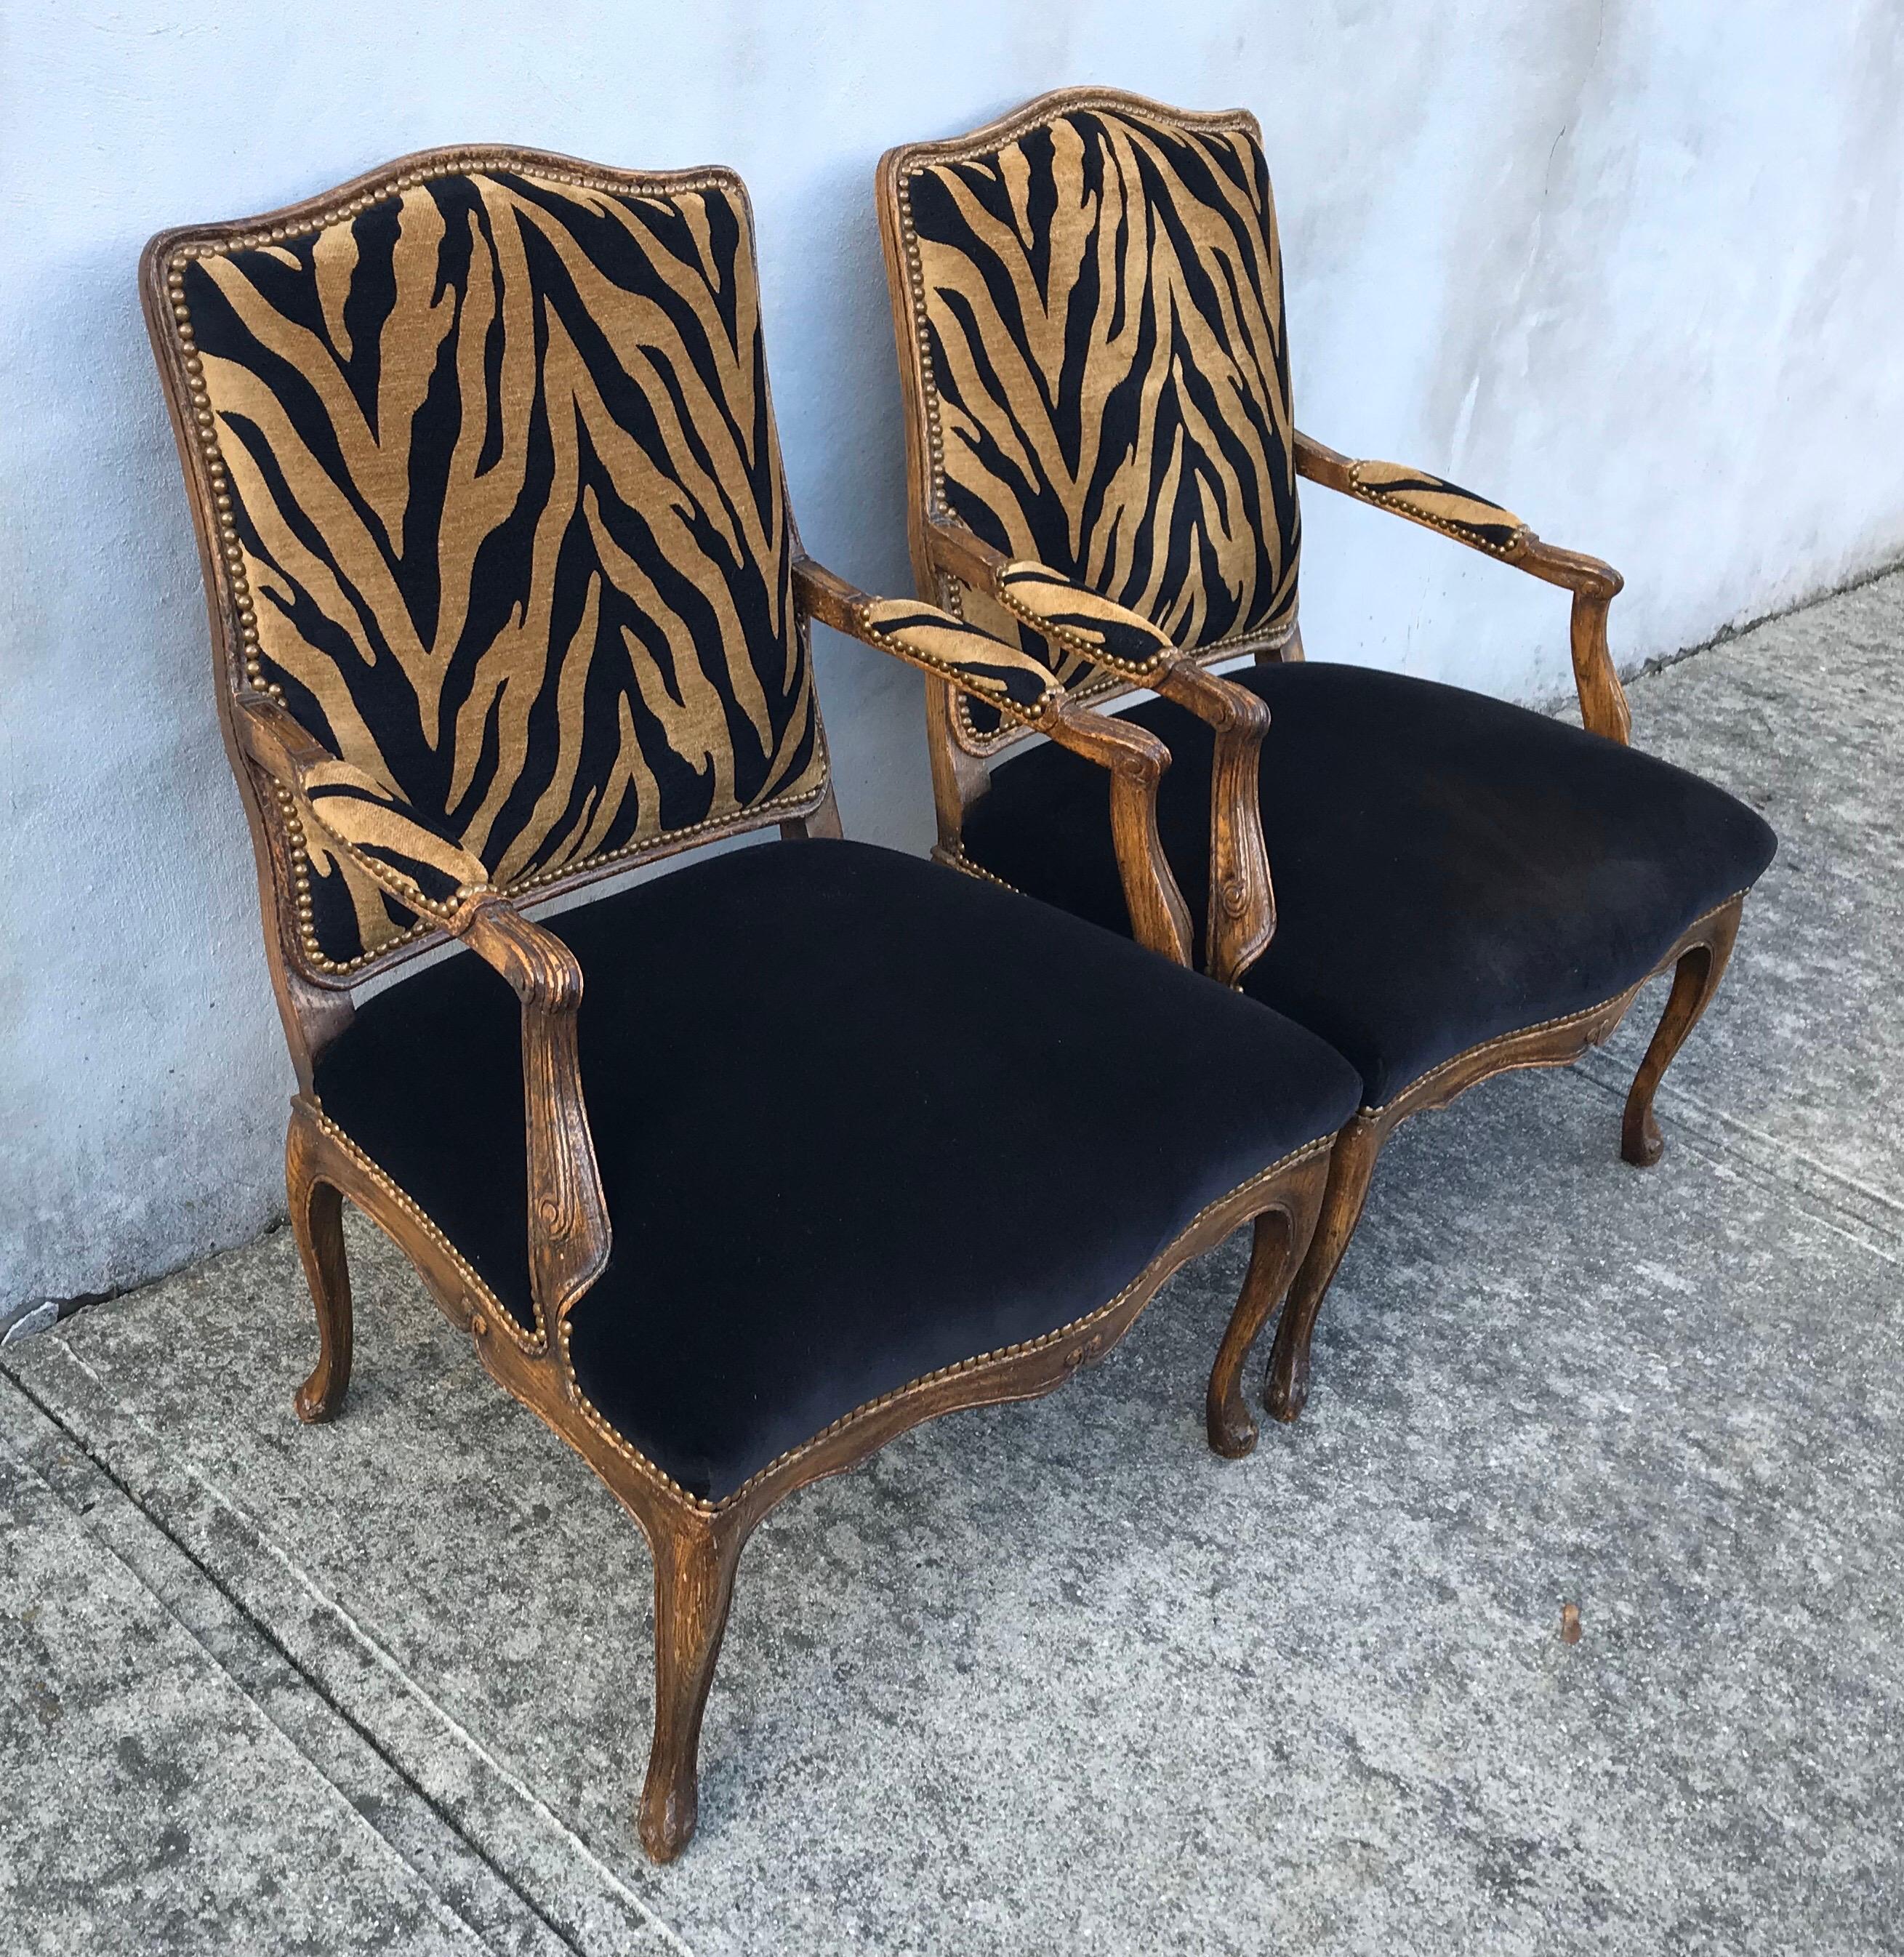 Beautiful pair of updated Hollywood Regency oak frame club chairs, recently reupholstered in zebra print velvet, black velvet seats. Oak frames date back to early 20th century.